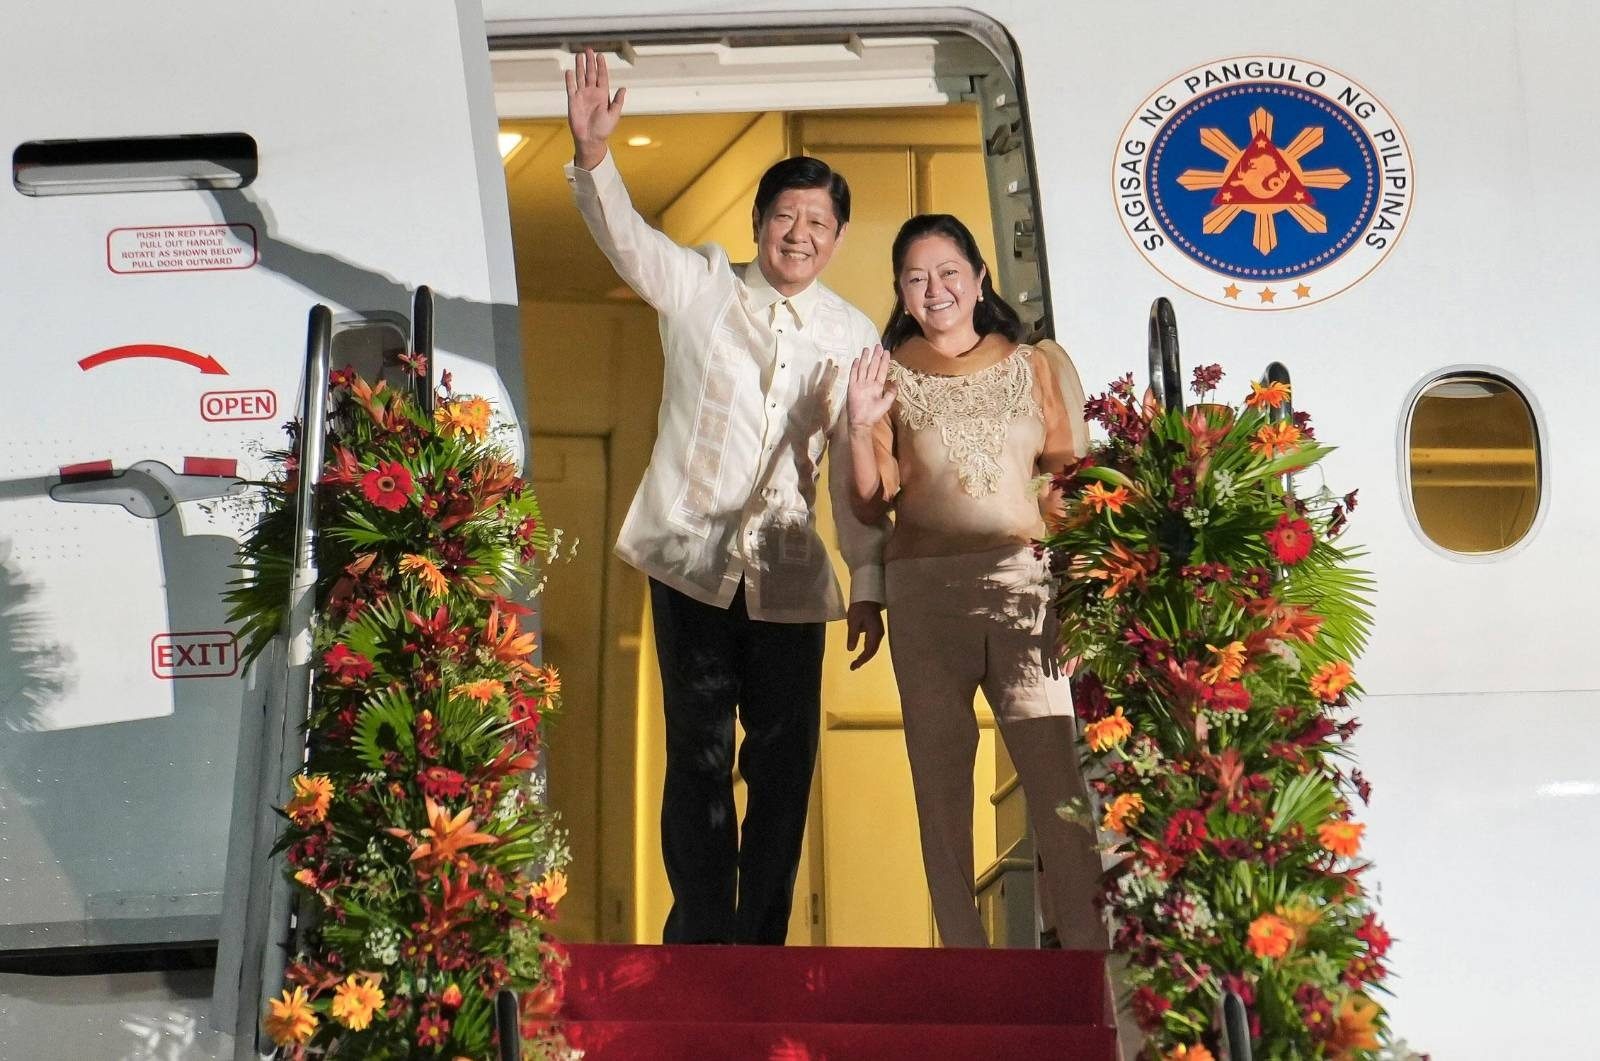 Marcos embarks on weeklong US trip for 2023 APEC Summit, return to Hawaii